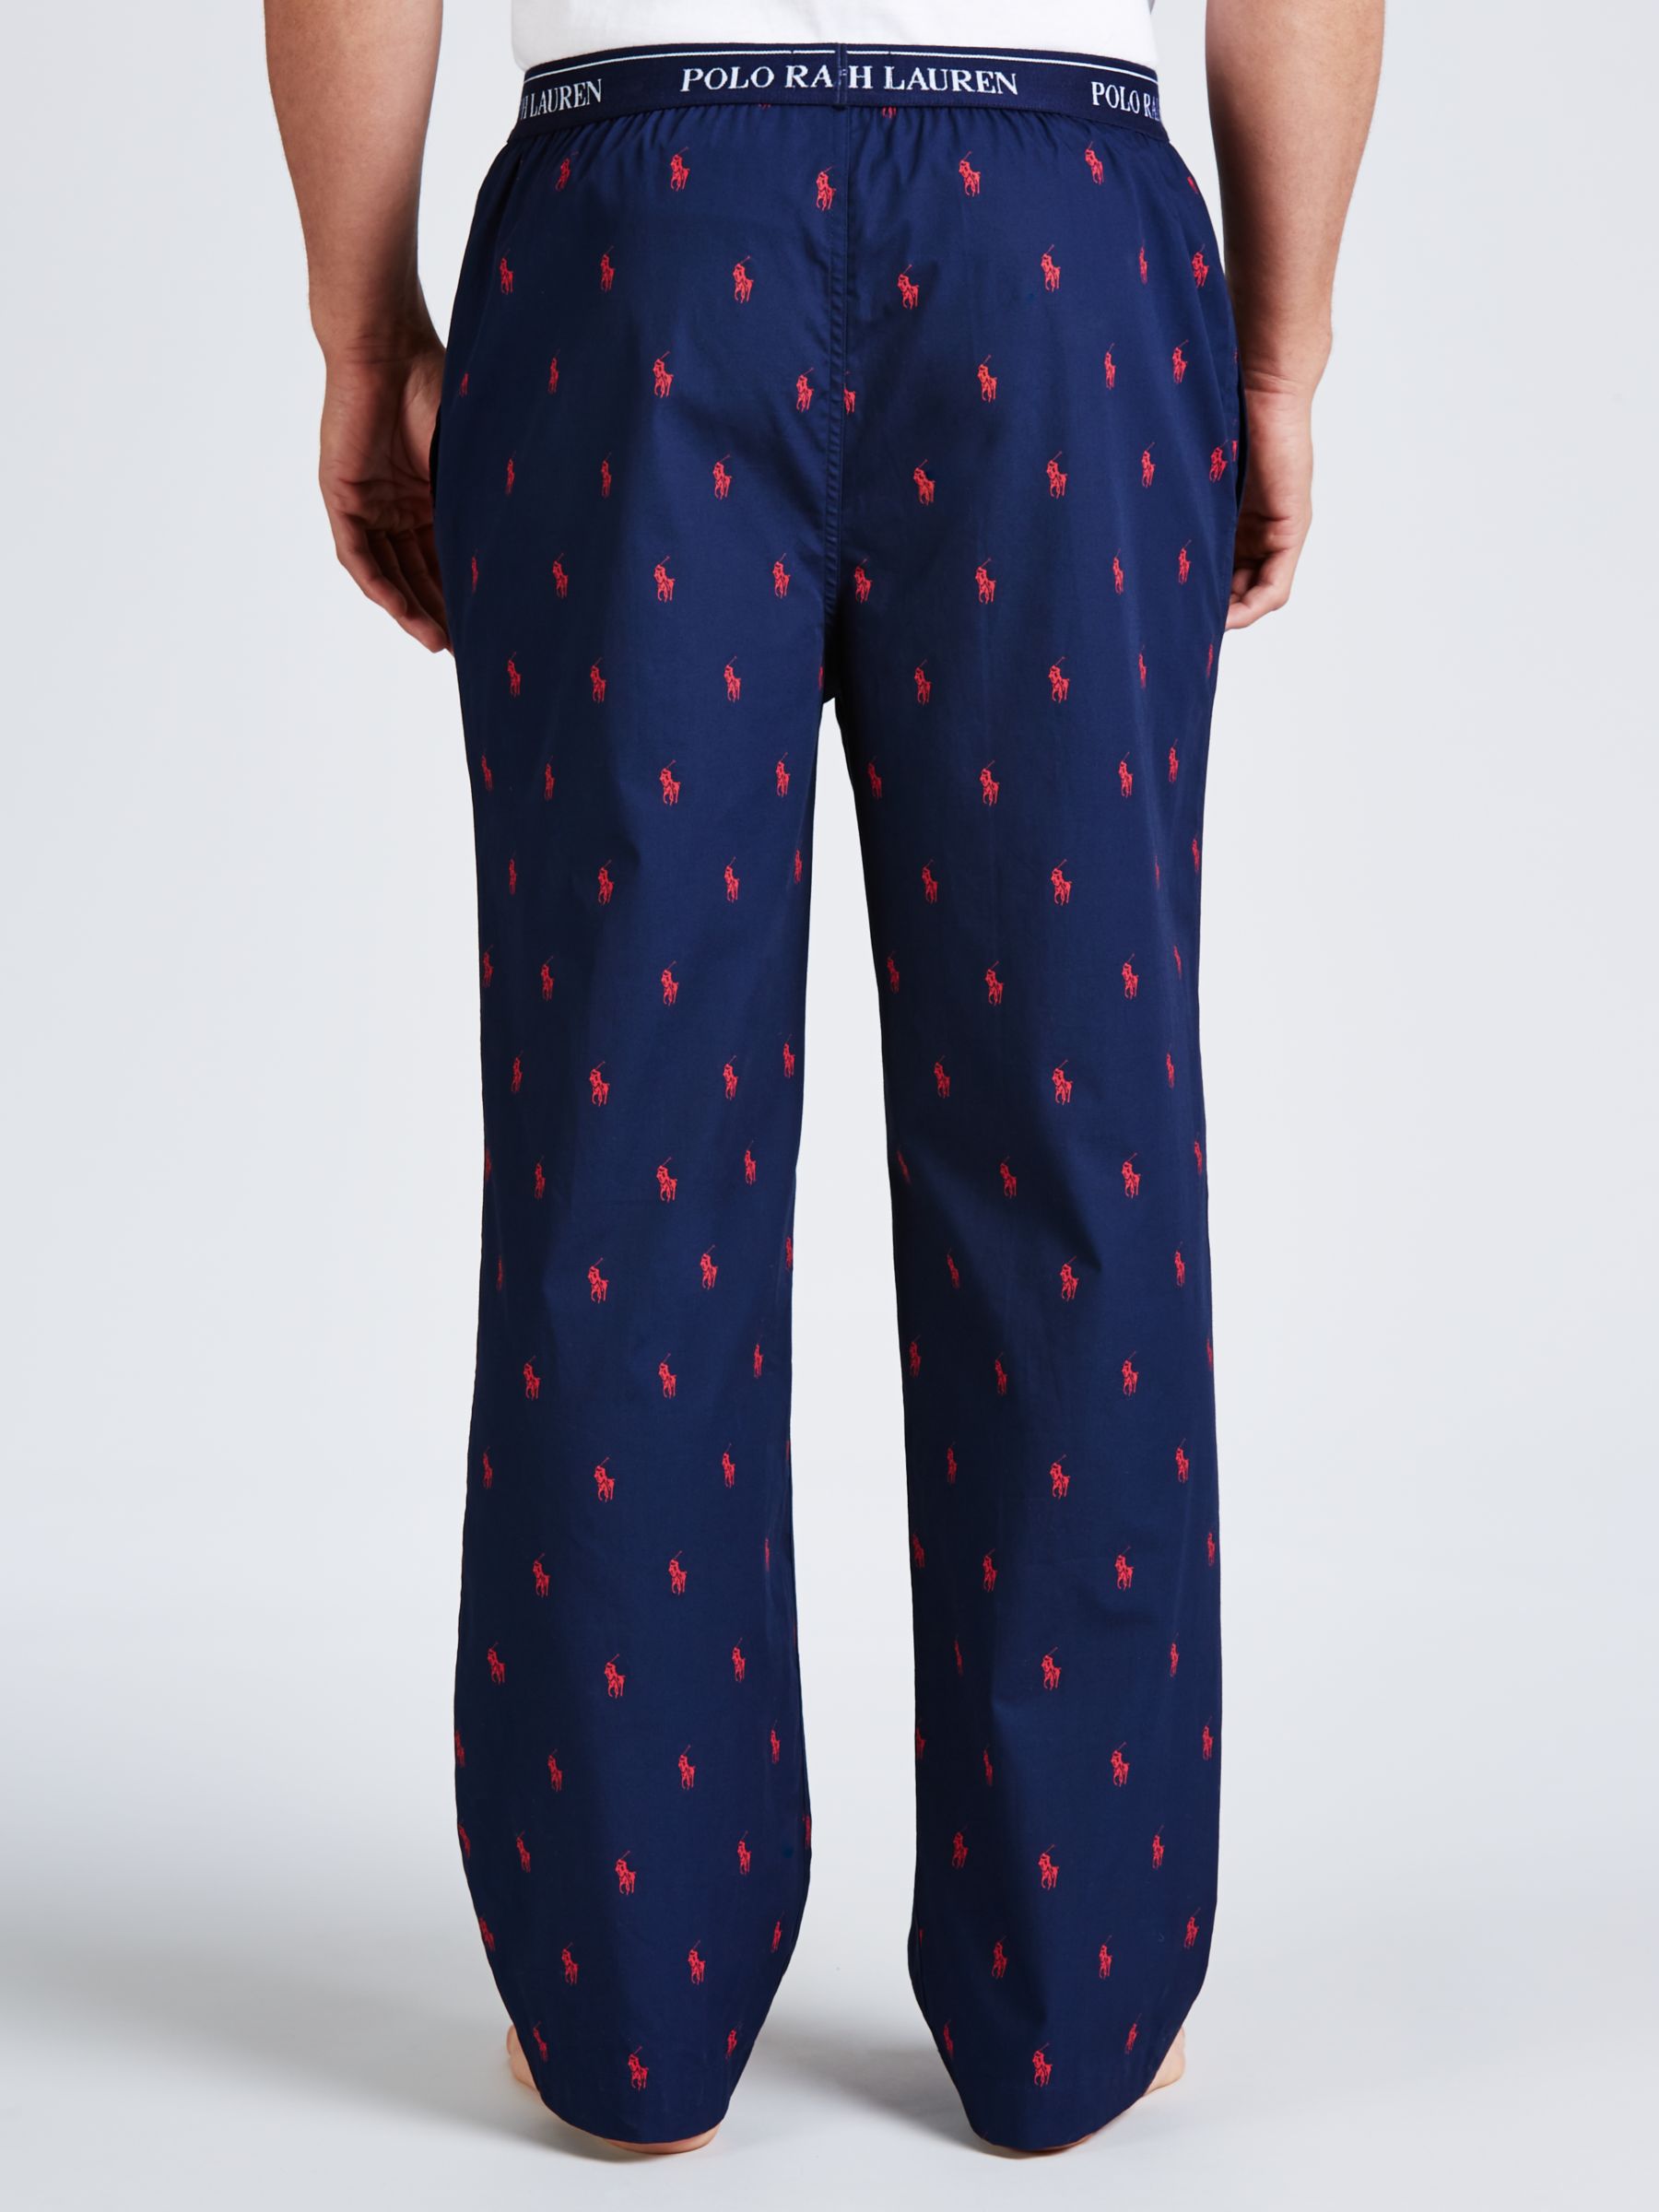 polo ralph lauren pyjama bottoms